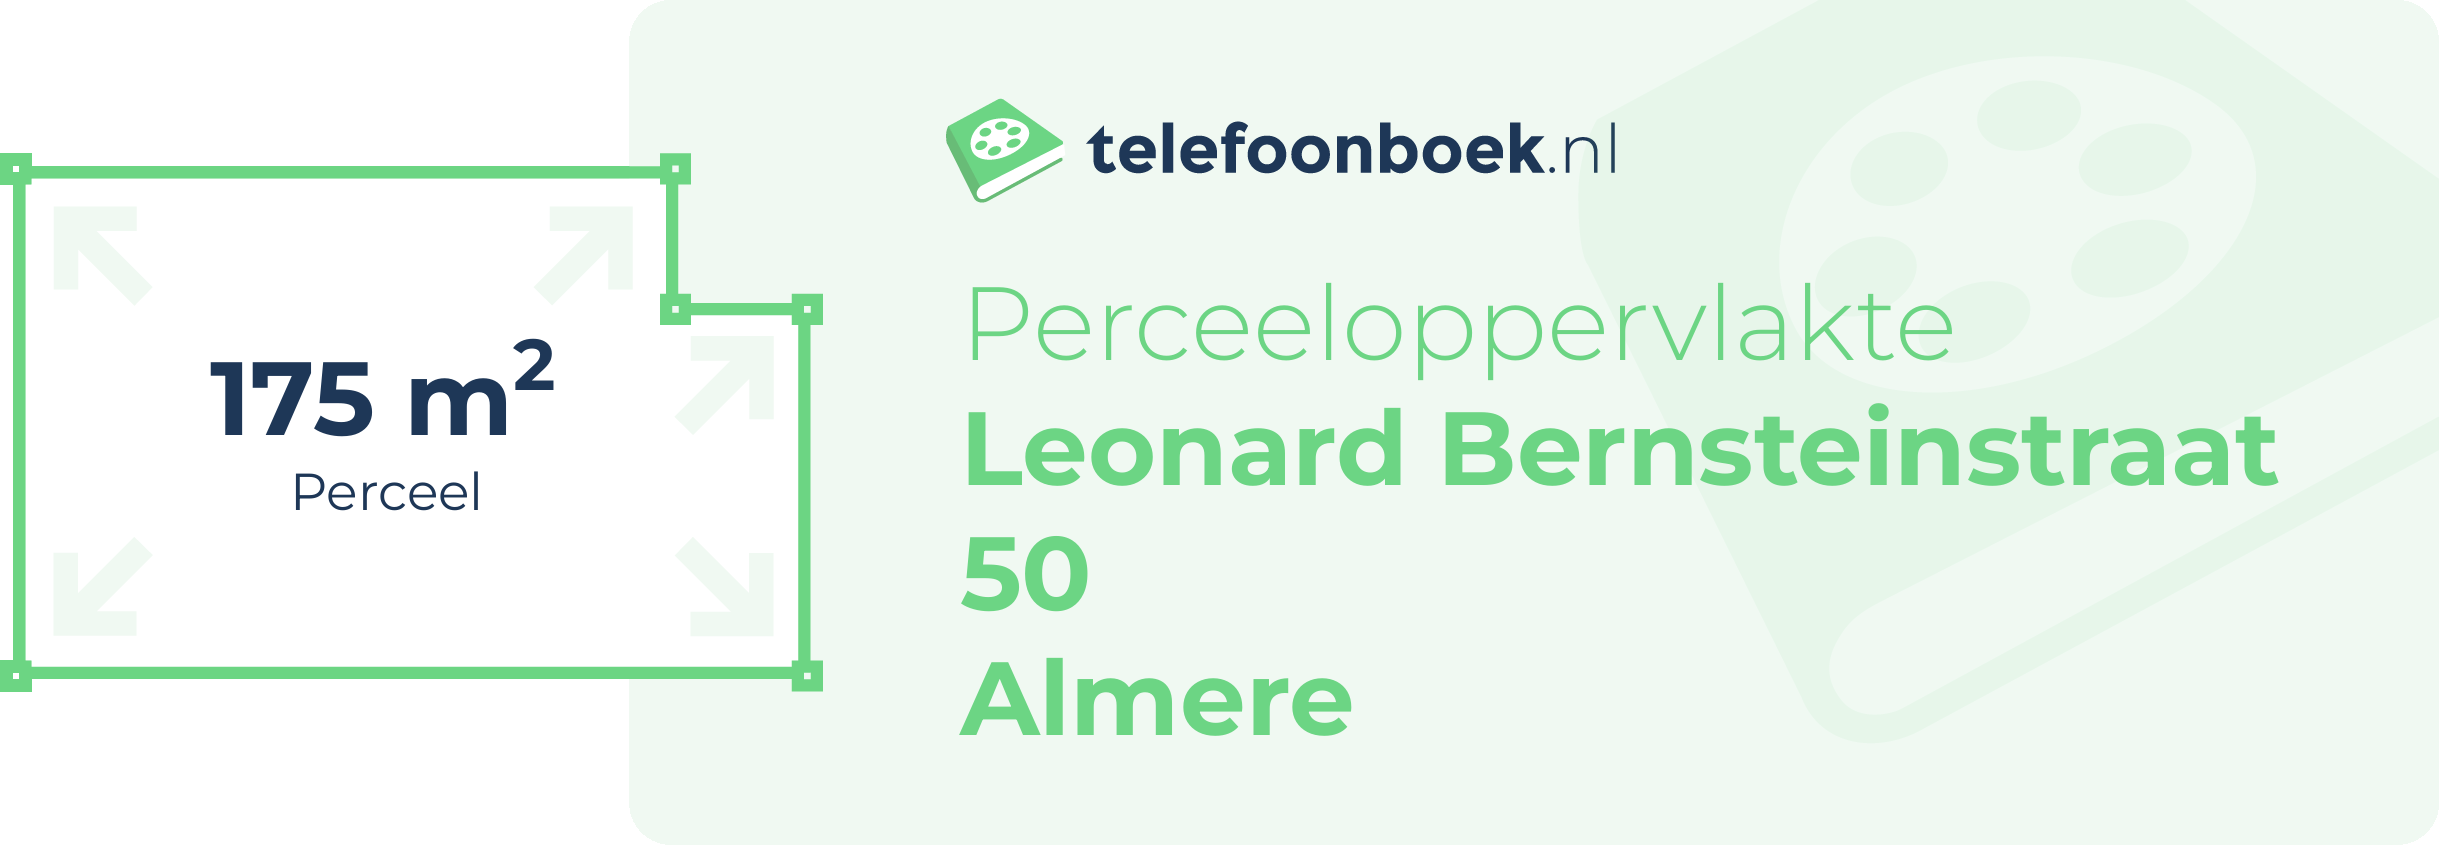 Perceeloppervlakte Leonard Bernsteinstraat 50 Almere